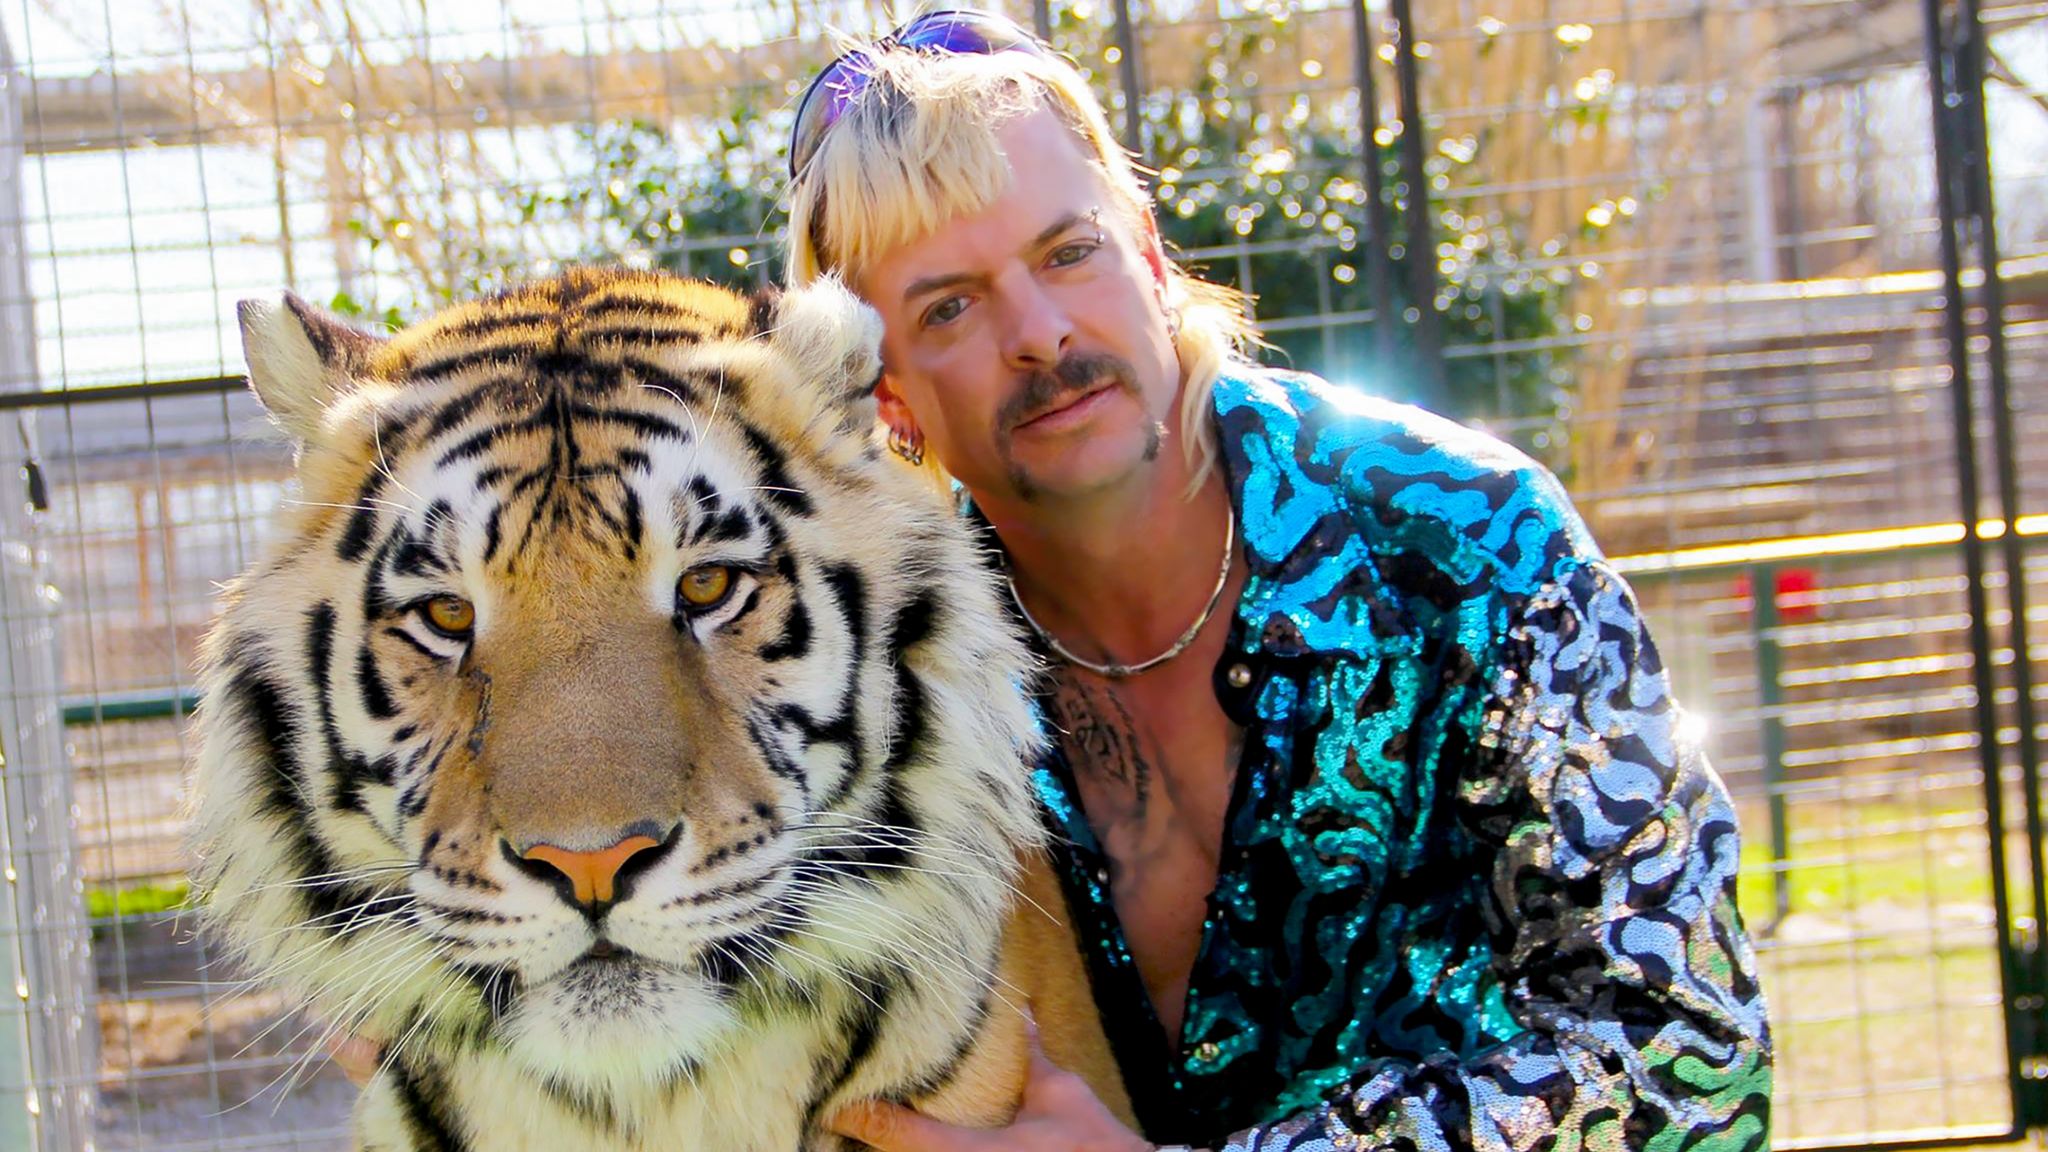 Tiger King: Animal rights group PETA warns against using live animals in TV  drama adaptation | Ents & Arts News | Sky News